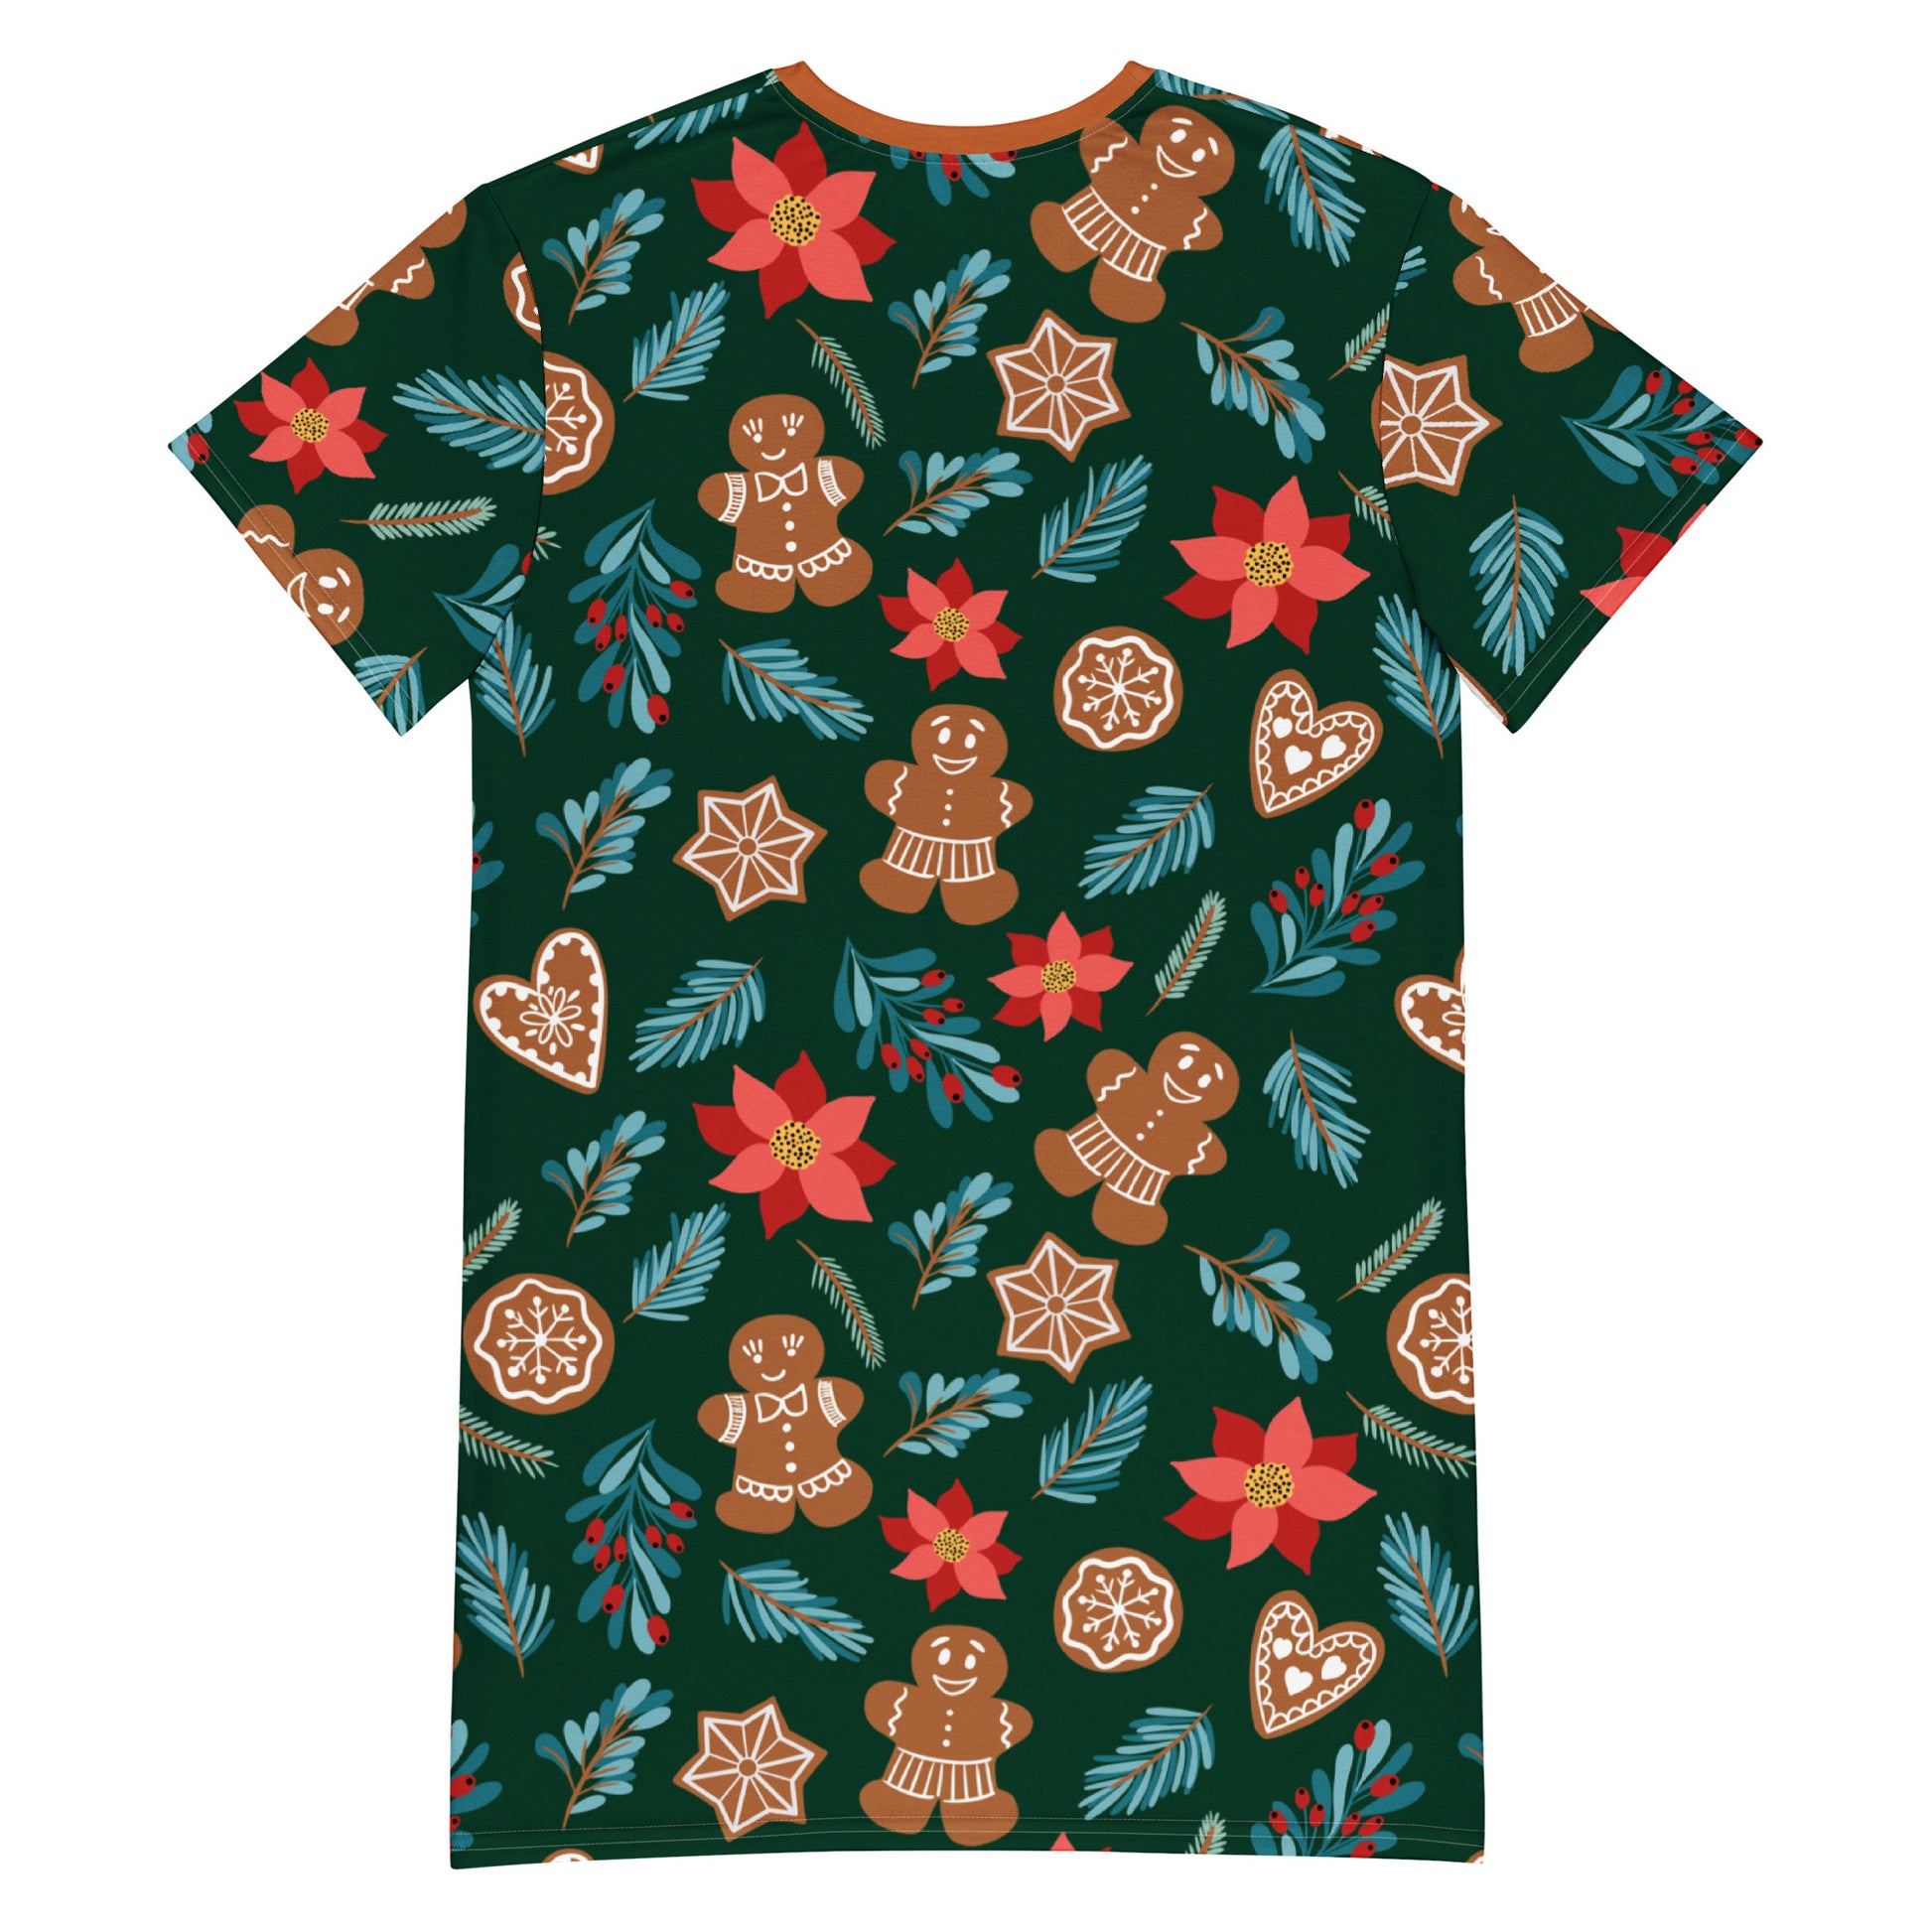 T-shirt dress - Fantasiapiparit / Gingerbread Fantasy - Dresses- Print N Stuff - [designed in Turku Finland]